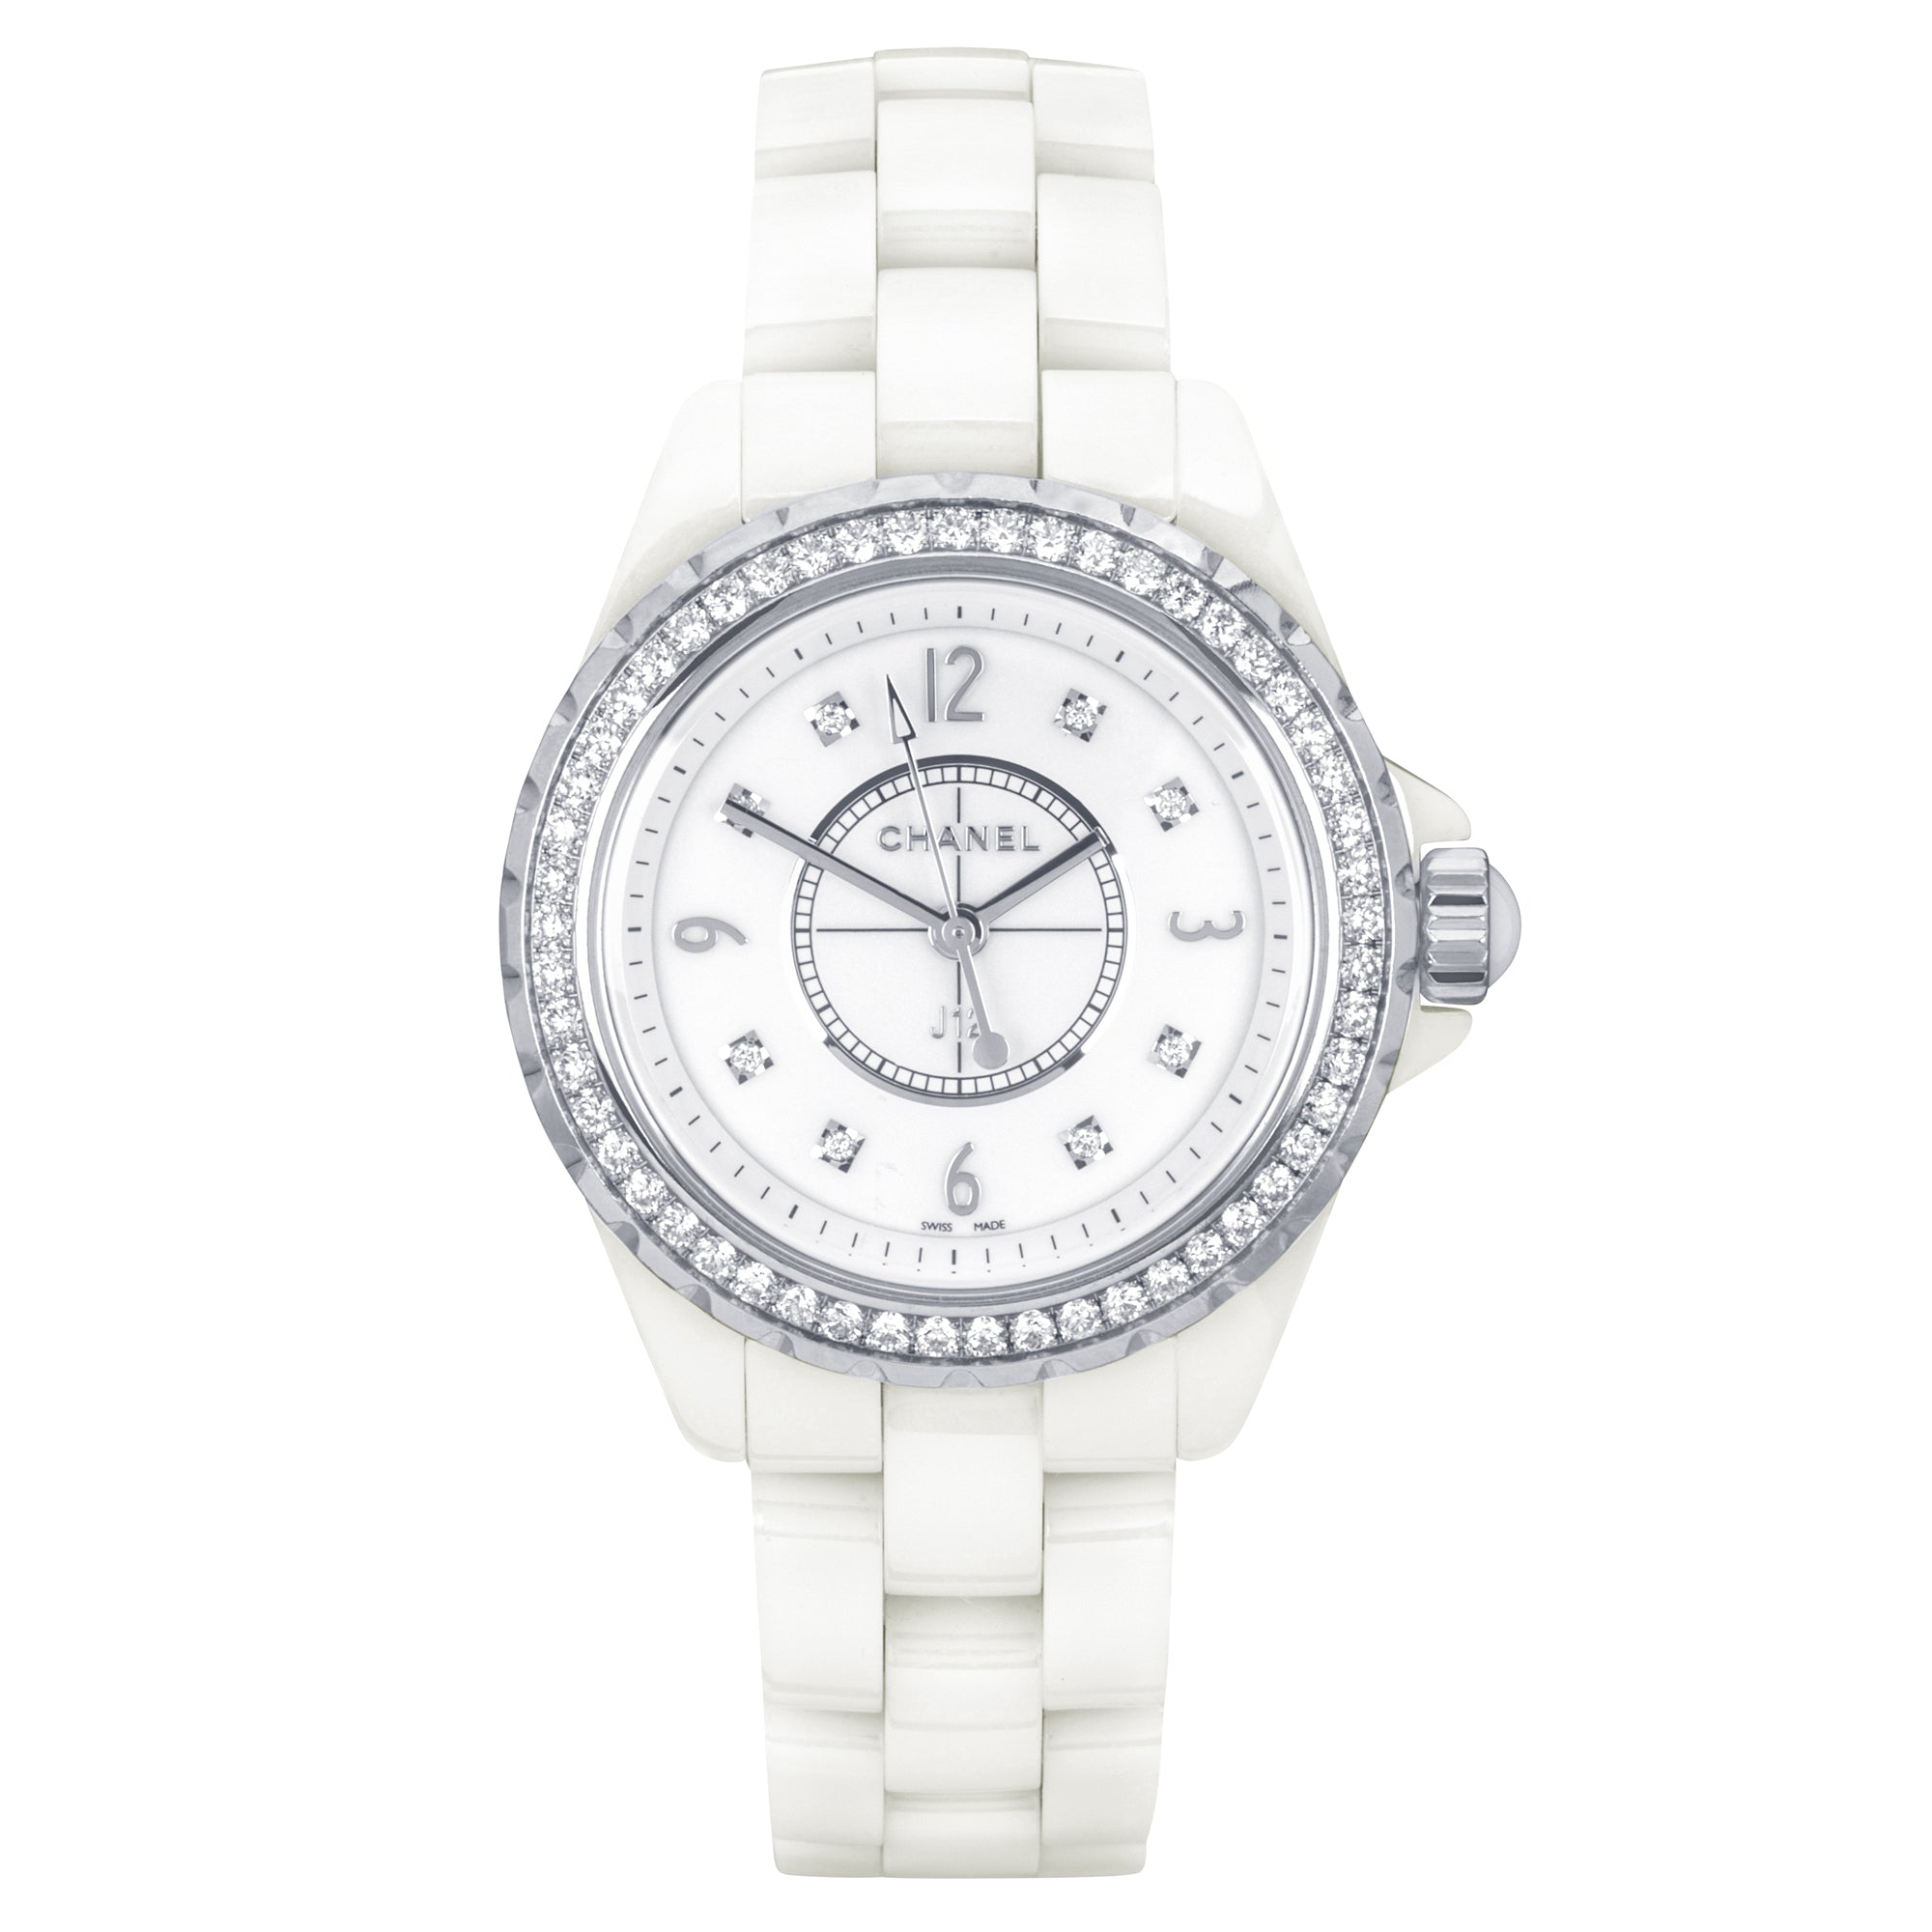 CHANEL J12 33mm White Ceramic & Diamond Bezel Ladies Watch (2012)